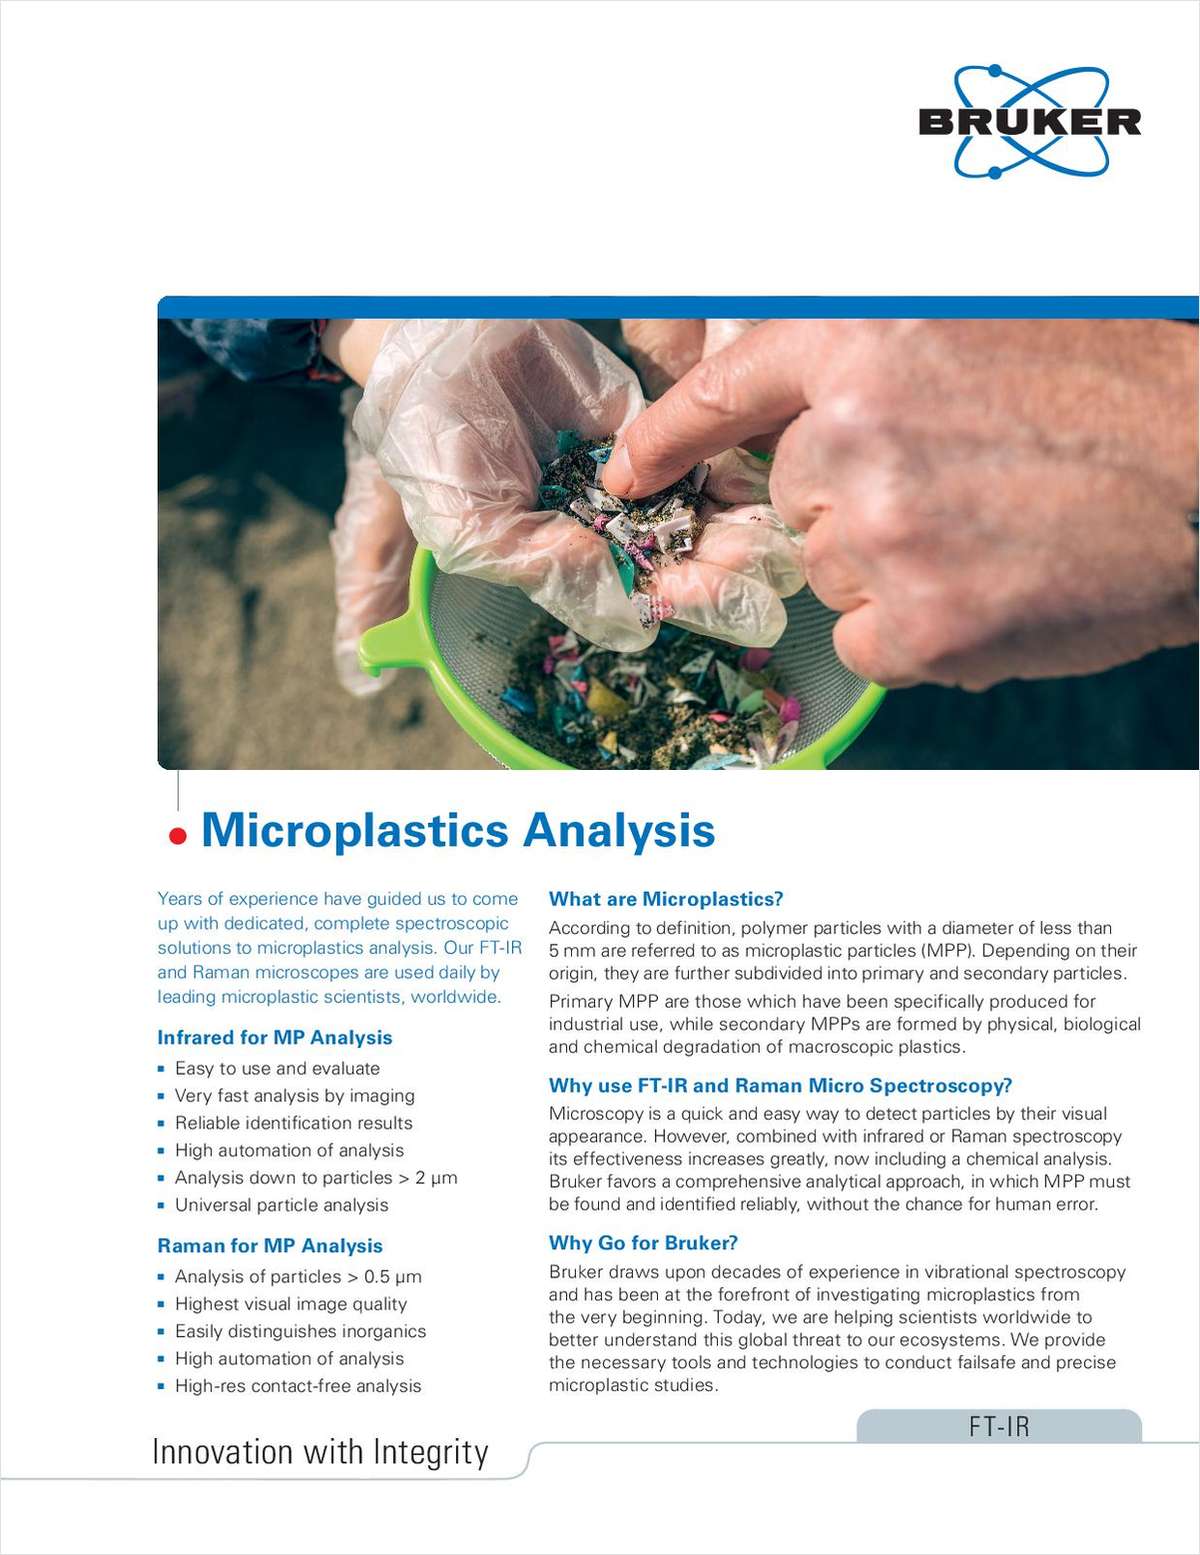 Microplastics Analysis and Microscopy